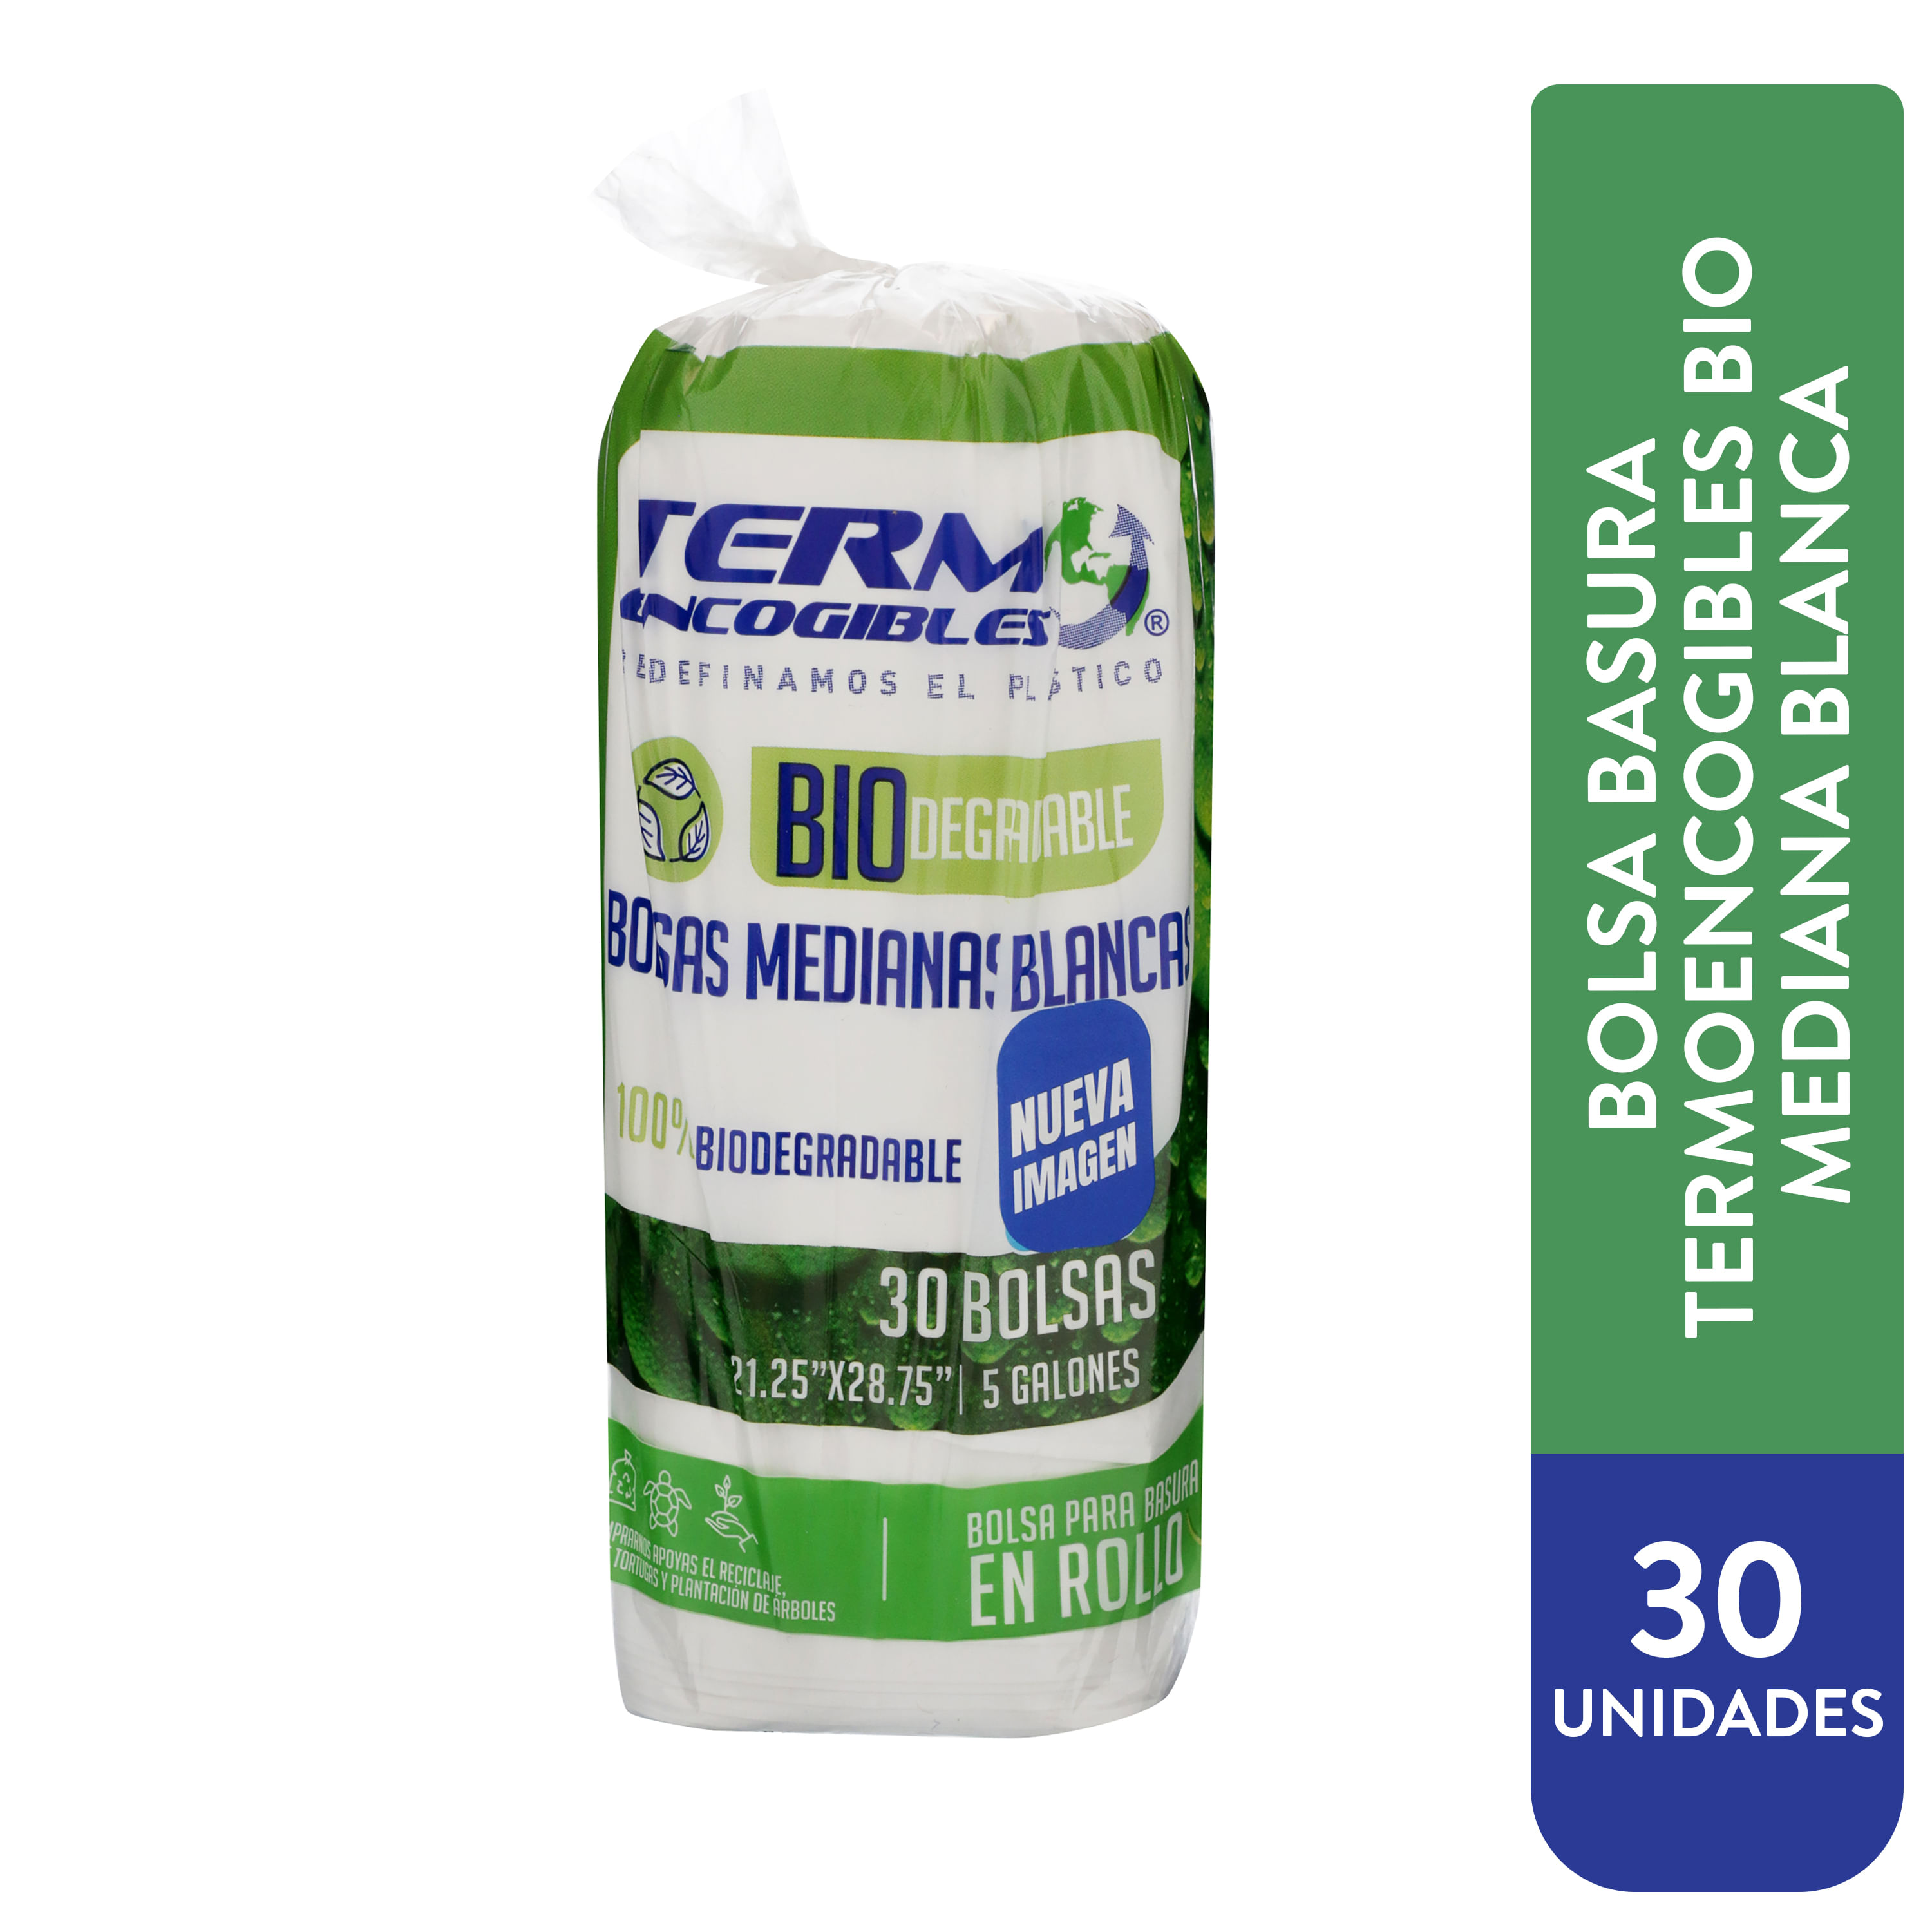 Comprar Bolsa Basura Termoencogibles Bio Mediana (21.25X28.75) 30 unidades, Walmart Costa Rica - Maxi Palí